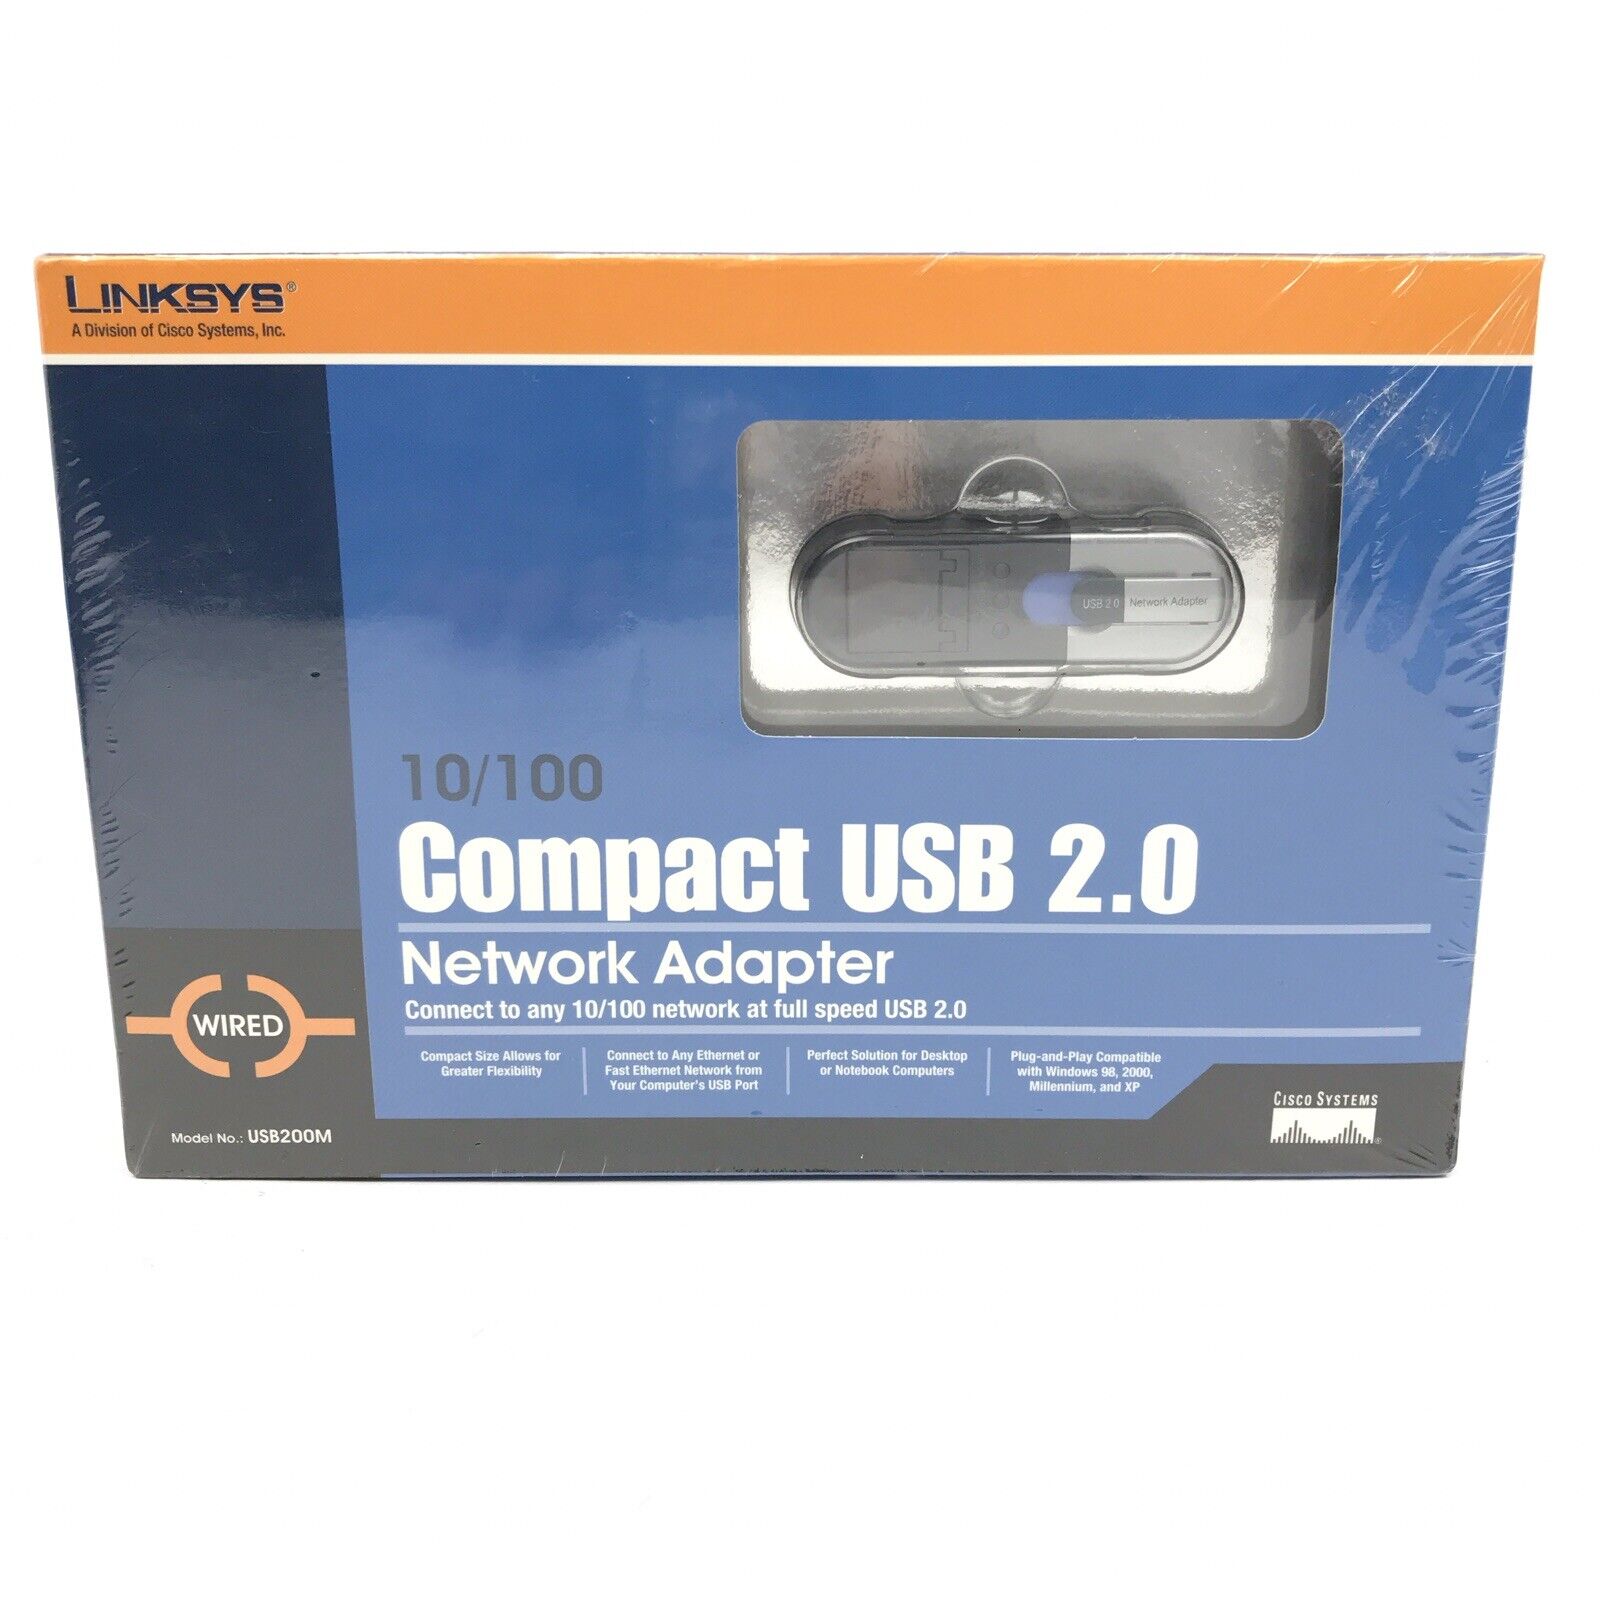 NIB Linksys Model USB200M Compact USB 2.0 Network Adapter